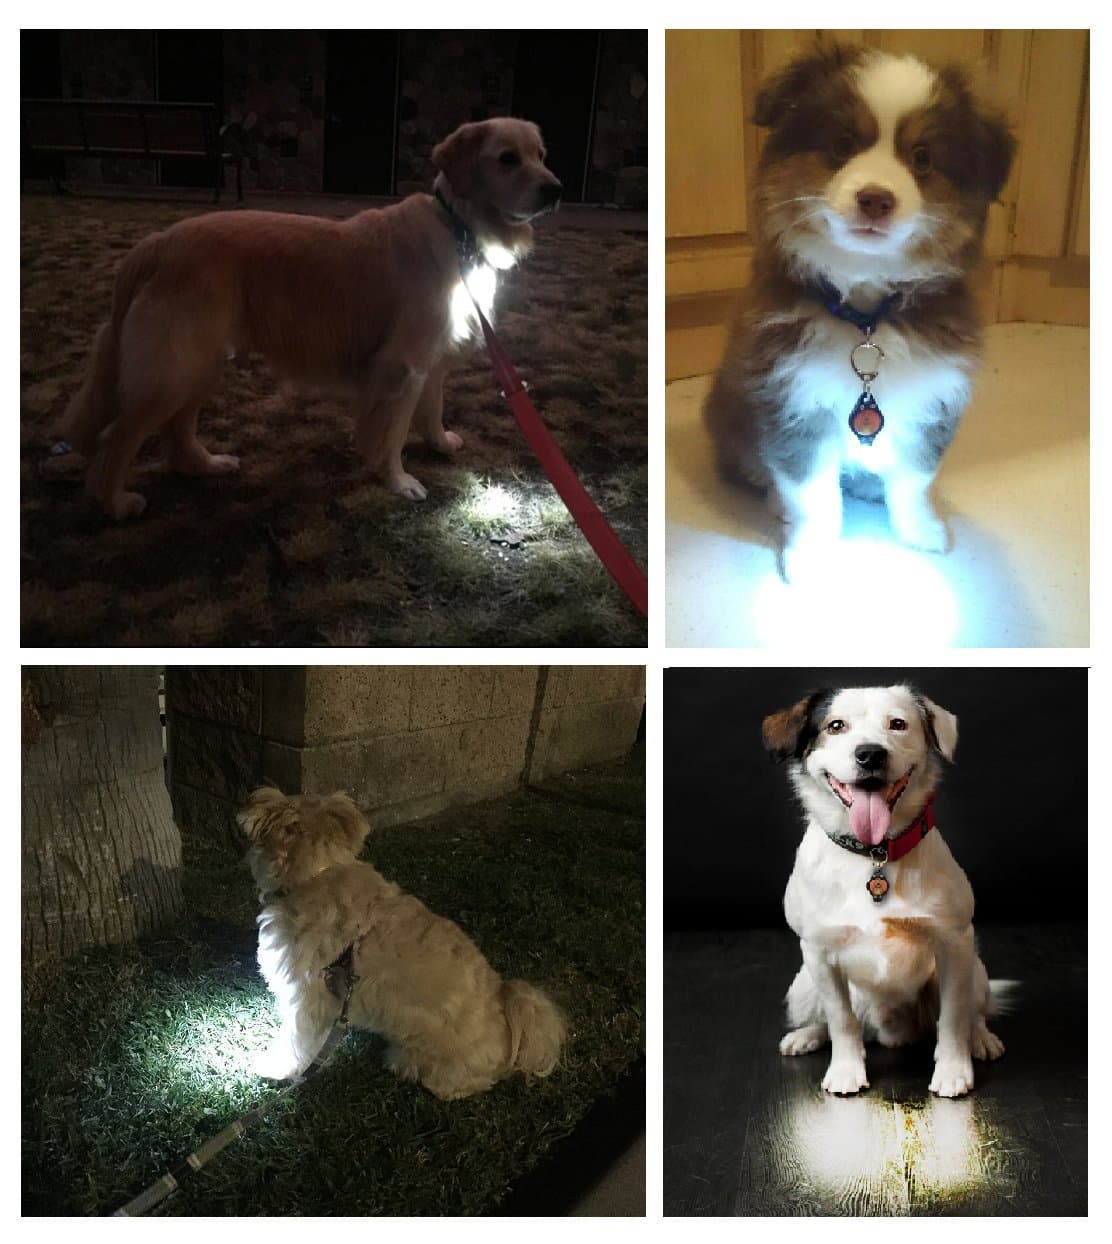 LaRoo LED Dog Tag Light,3 Flashing Model Bright Waterproof Dog Collar Light,Safety Light for Dog Walks & Outdoor Sport. Green